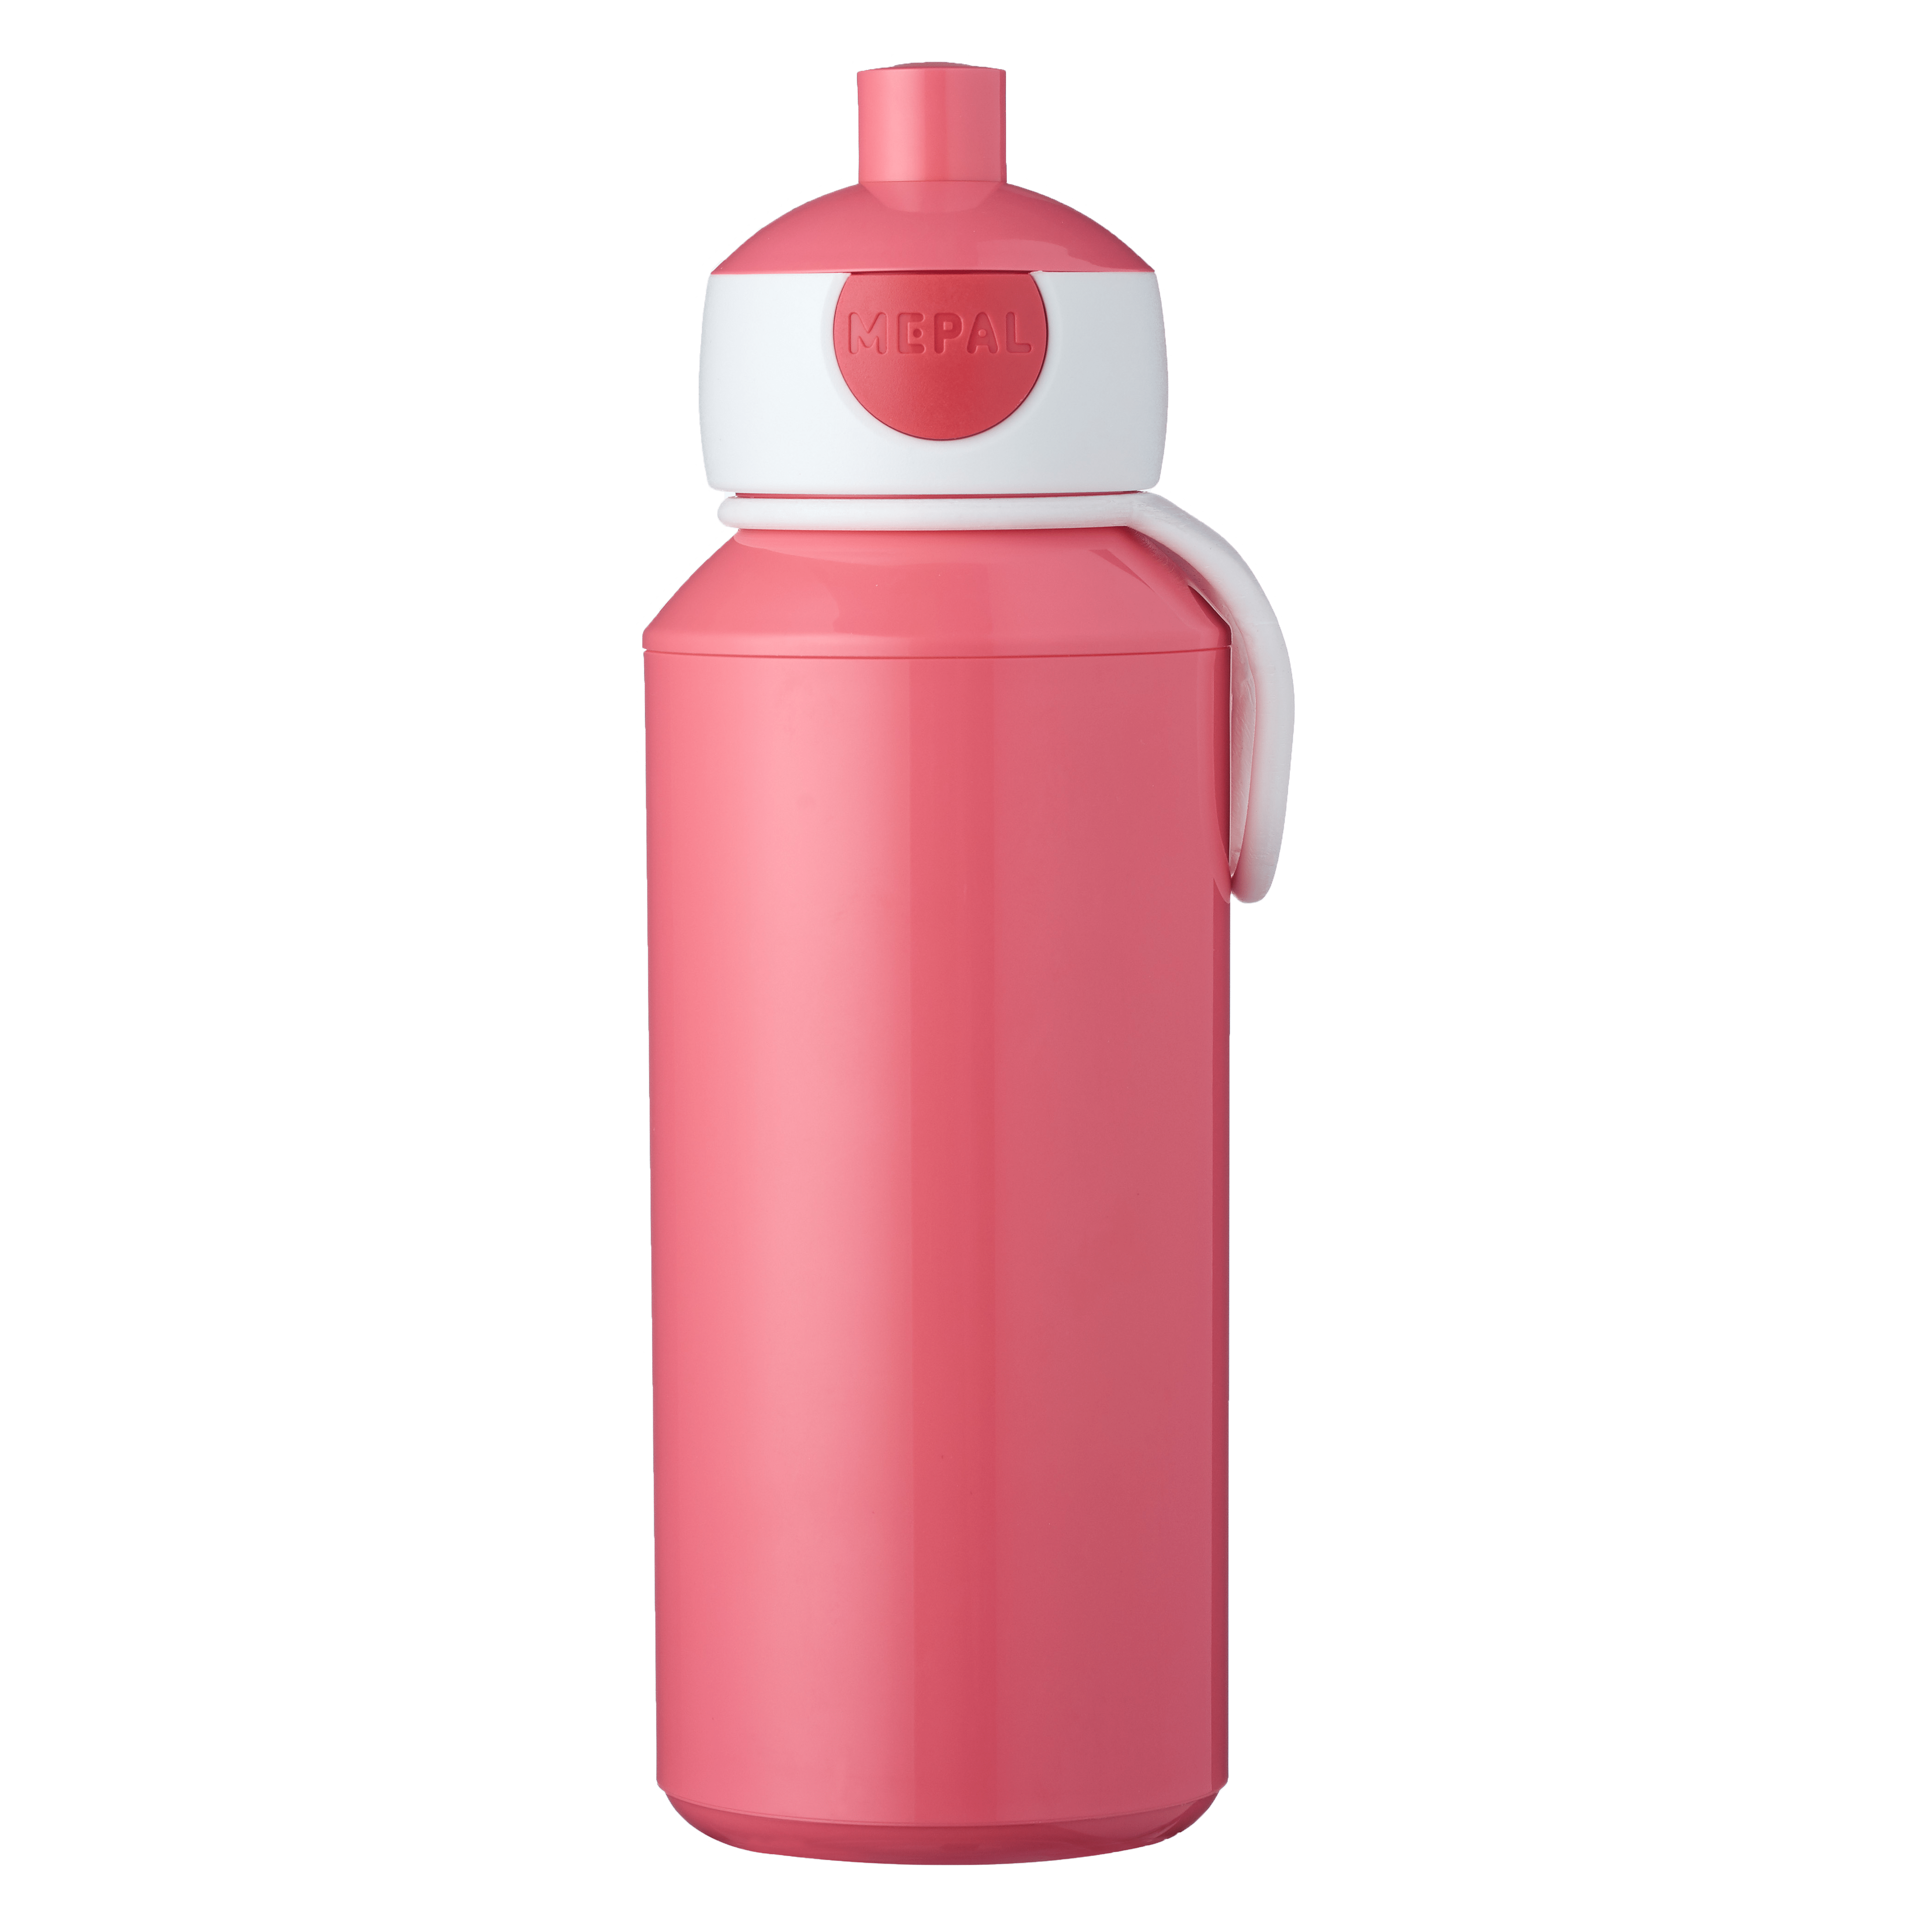 Mepal-Pop-up-drinkfles-campus-roze